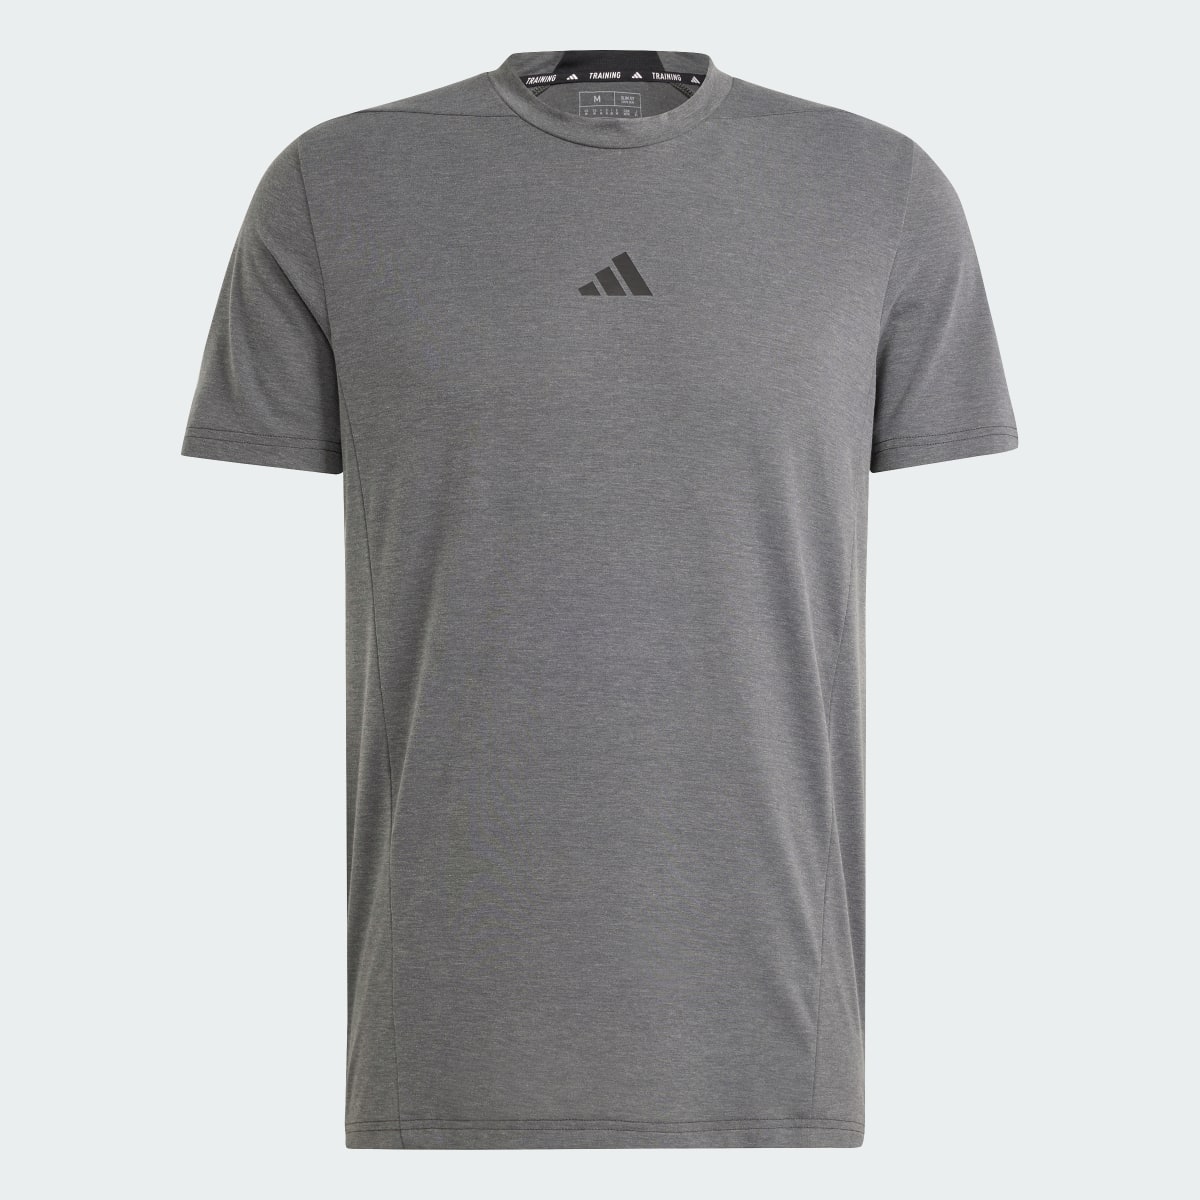 Adidas T-shirt Designed for Training. 6